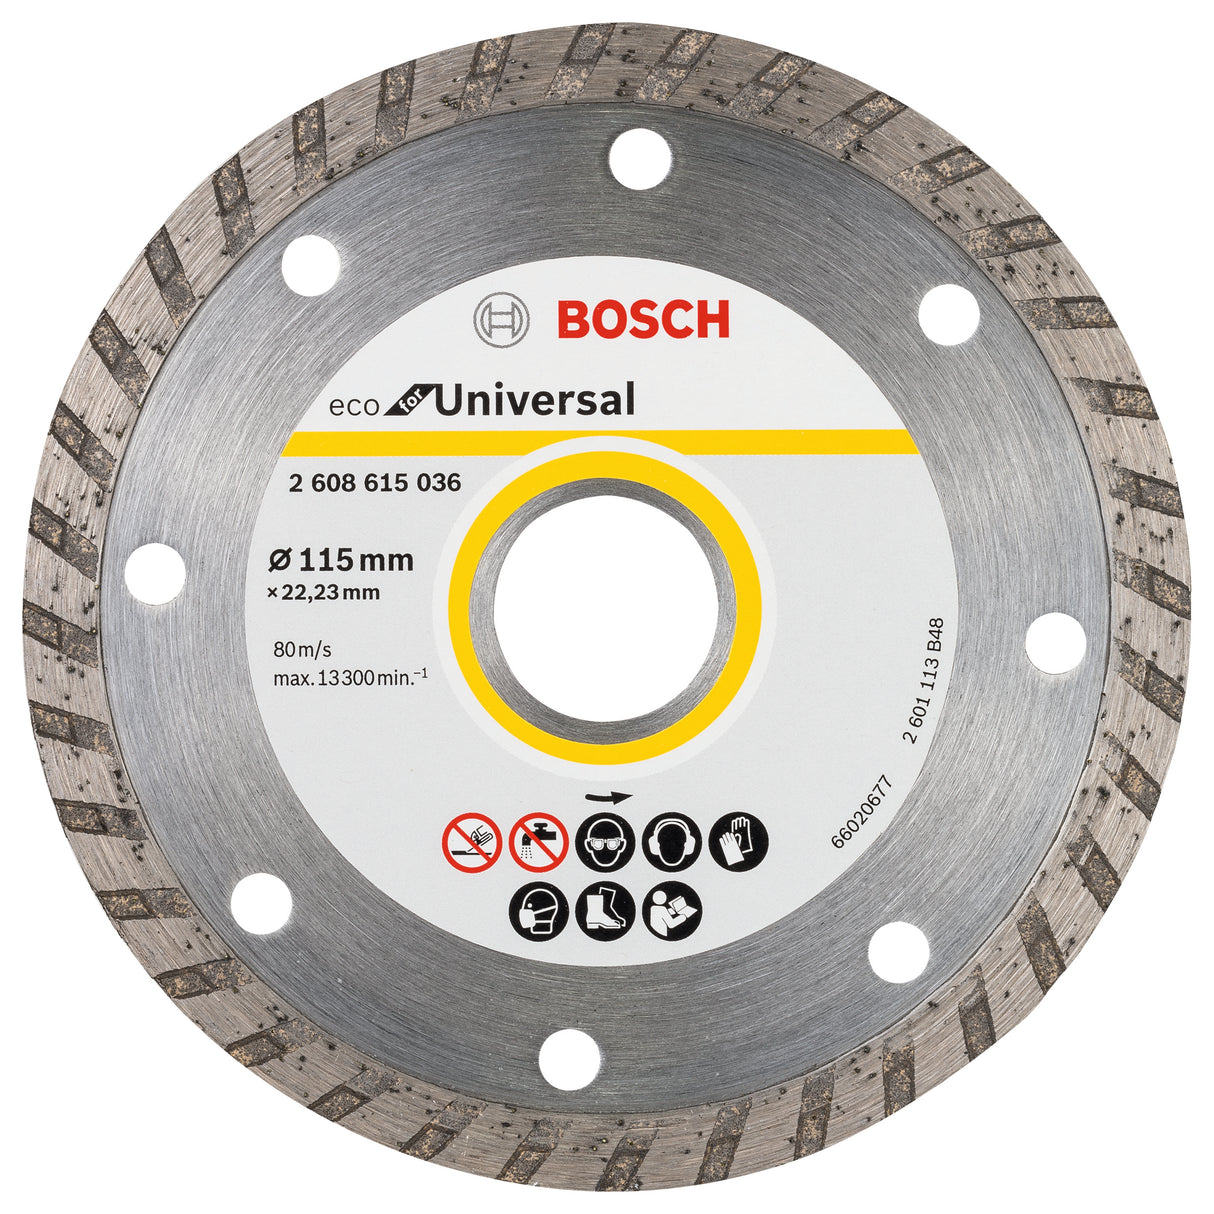 Bosch Professional Diamond Cutting Disc ECO - Universal, 115x22.23x2.0x7